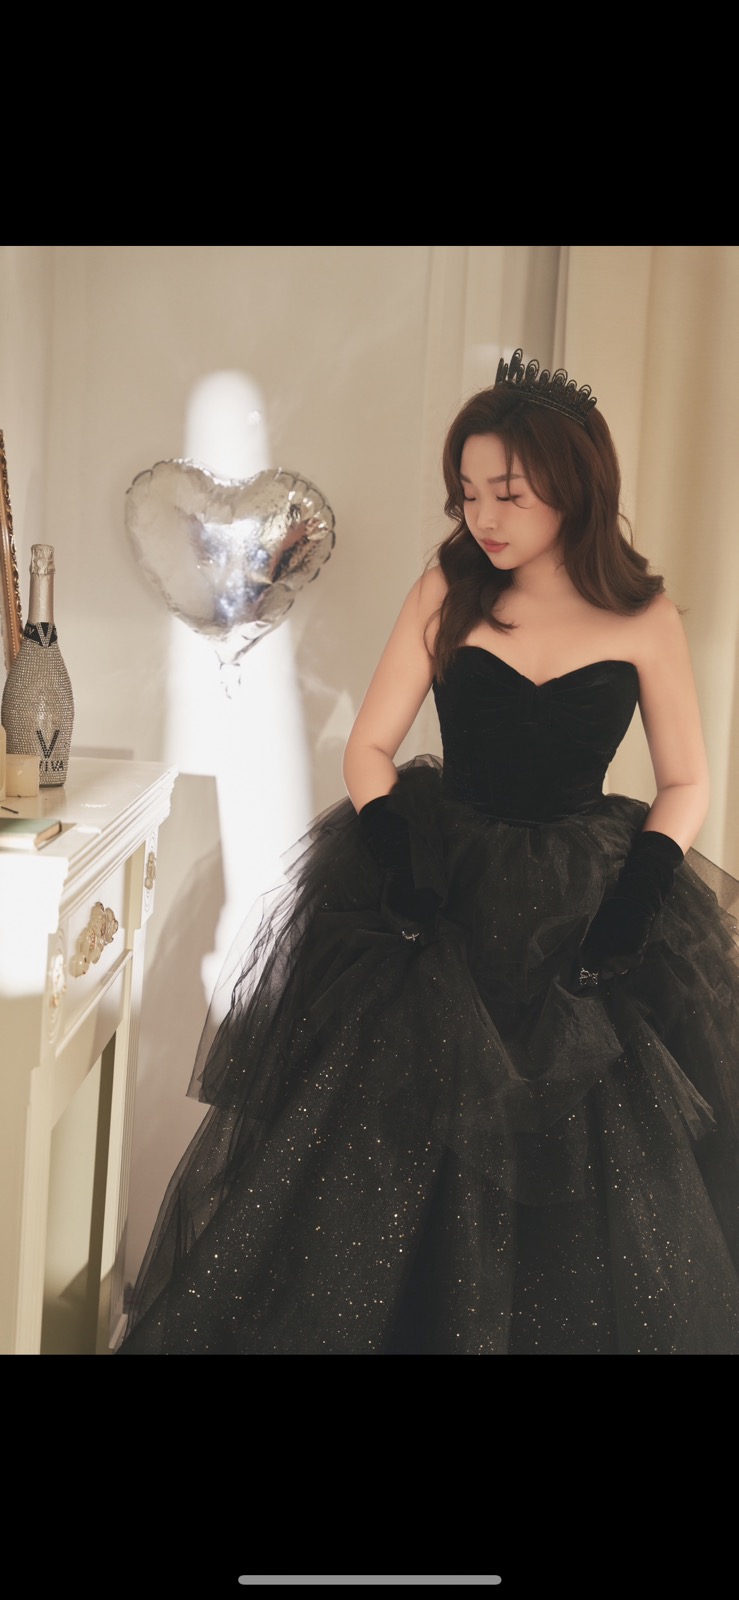 Lily Blair in a black dress